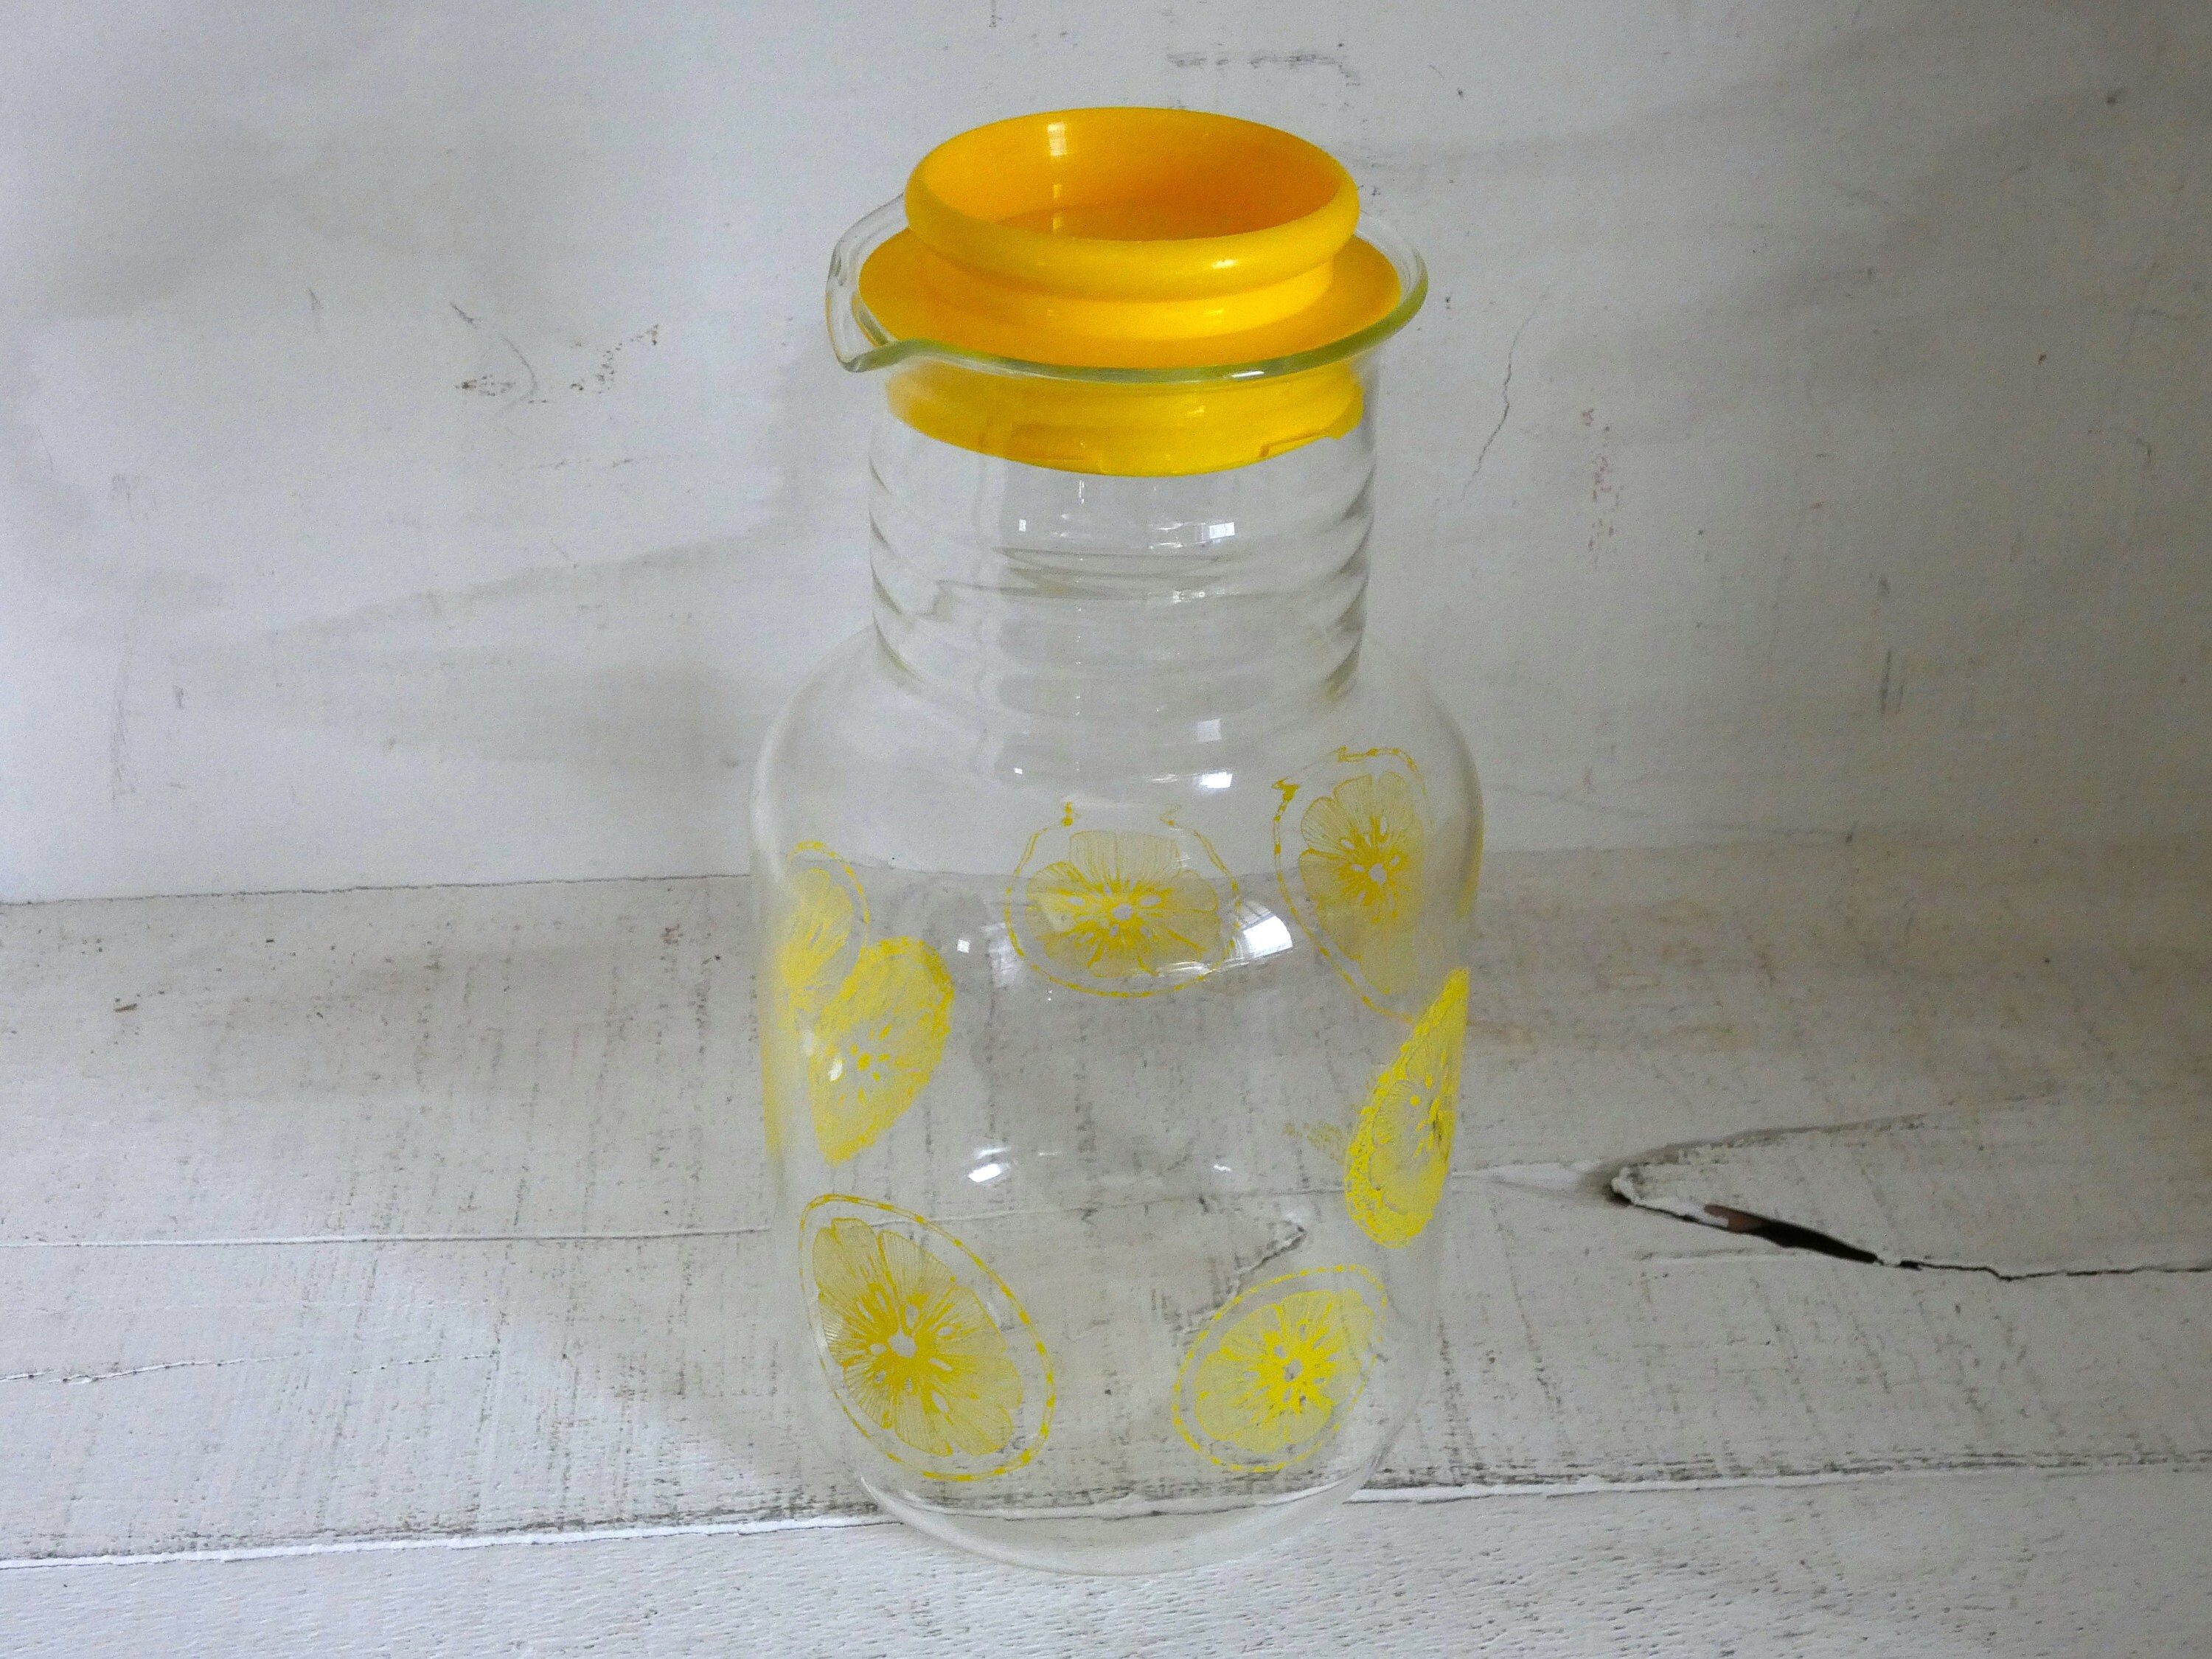 Vintage 70s Retro Yellow Glass Juice Pitcher Jar Decanter yellow